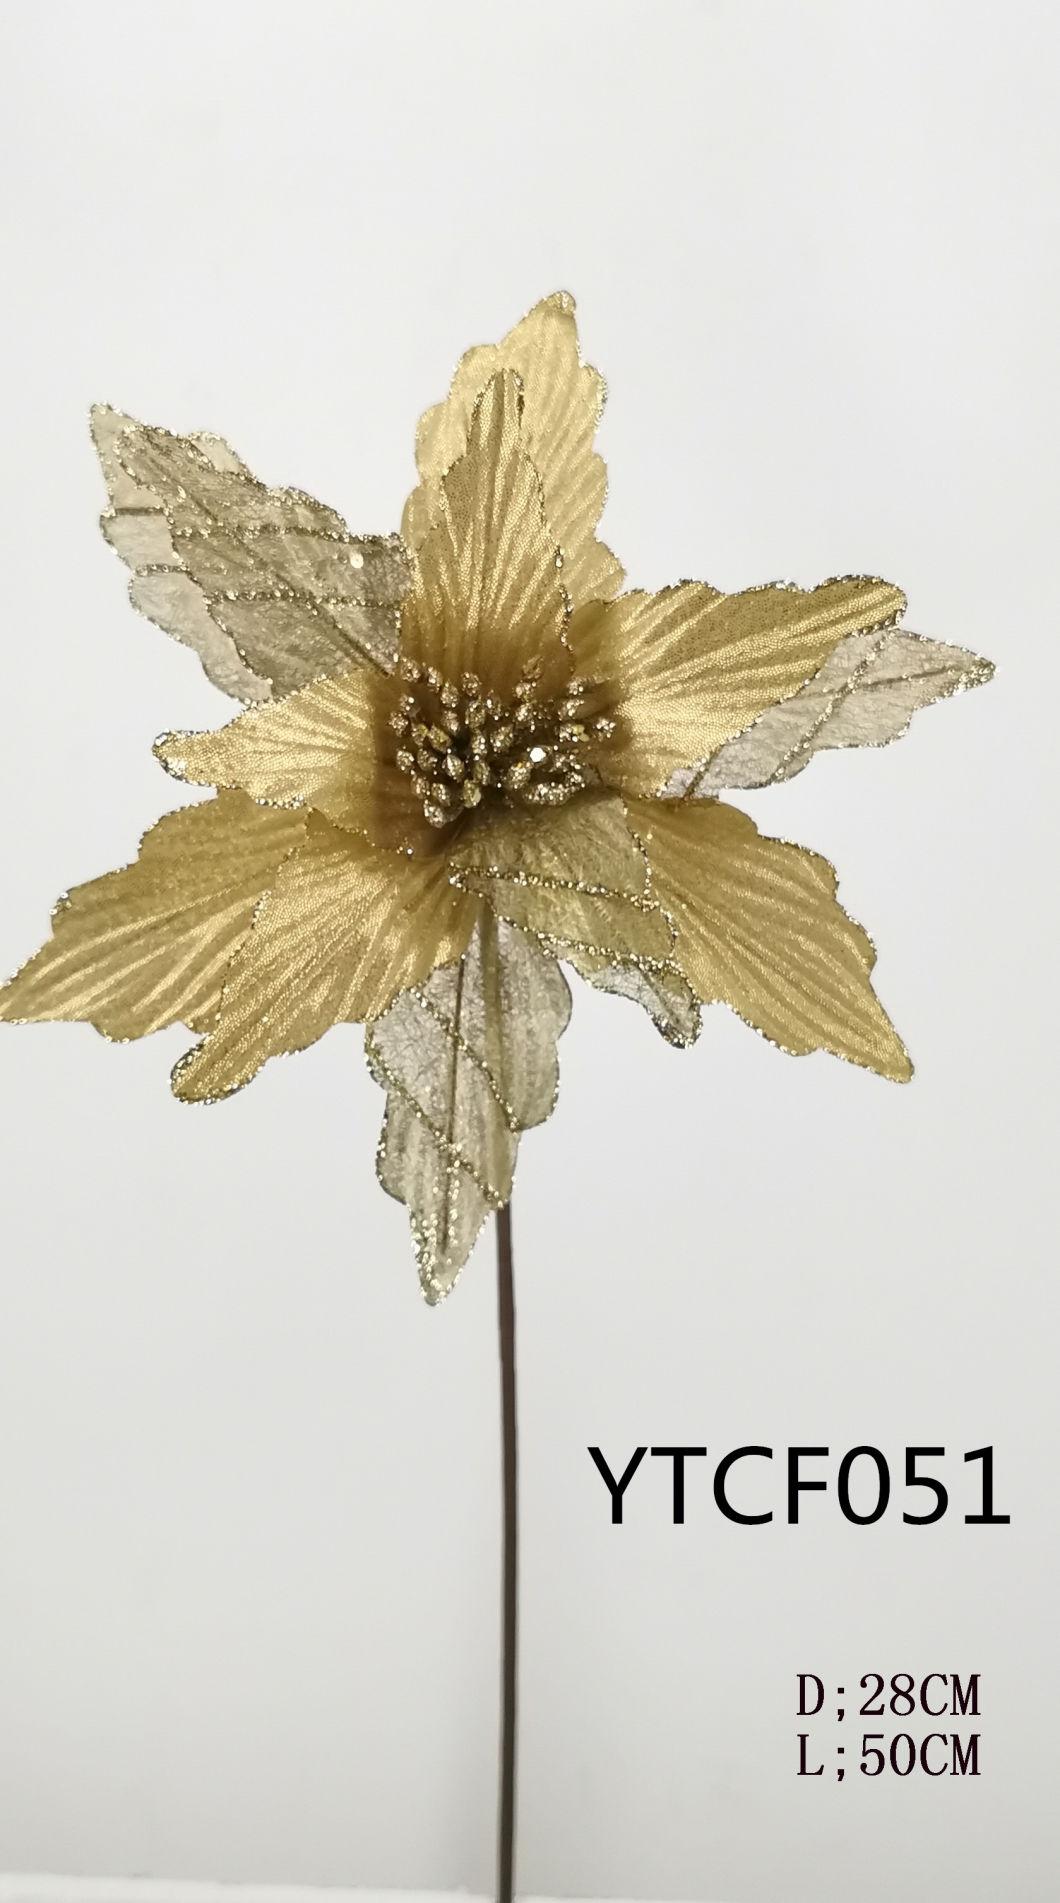 Ytcf083 Golden Christmas Poinsettia Flowers with Glitter Center Artificial Flower